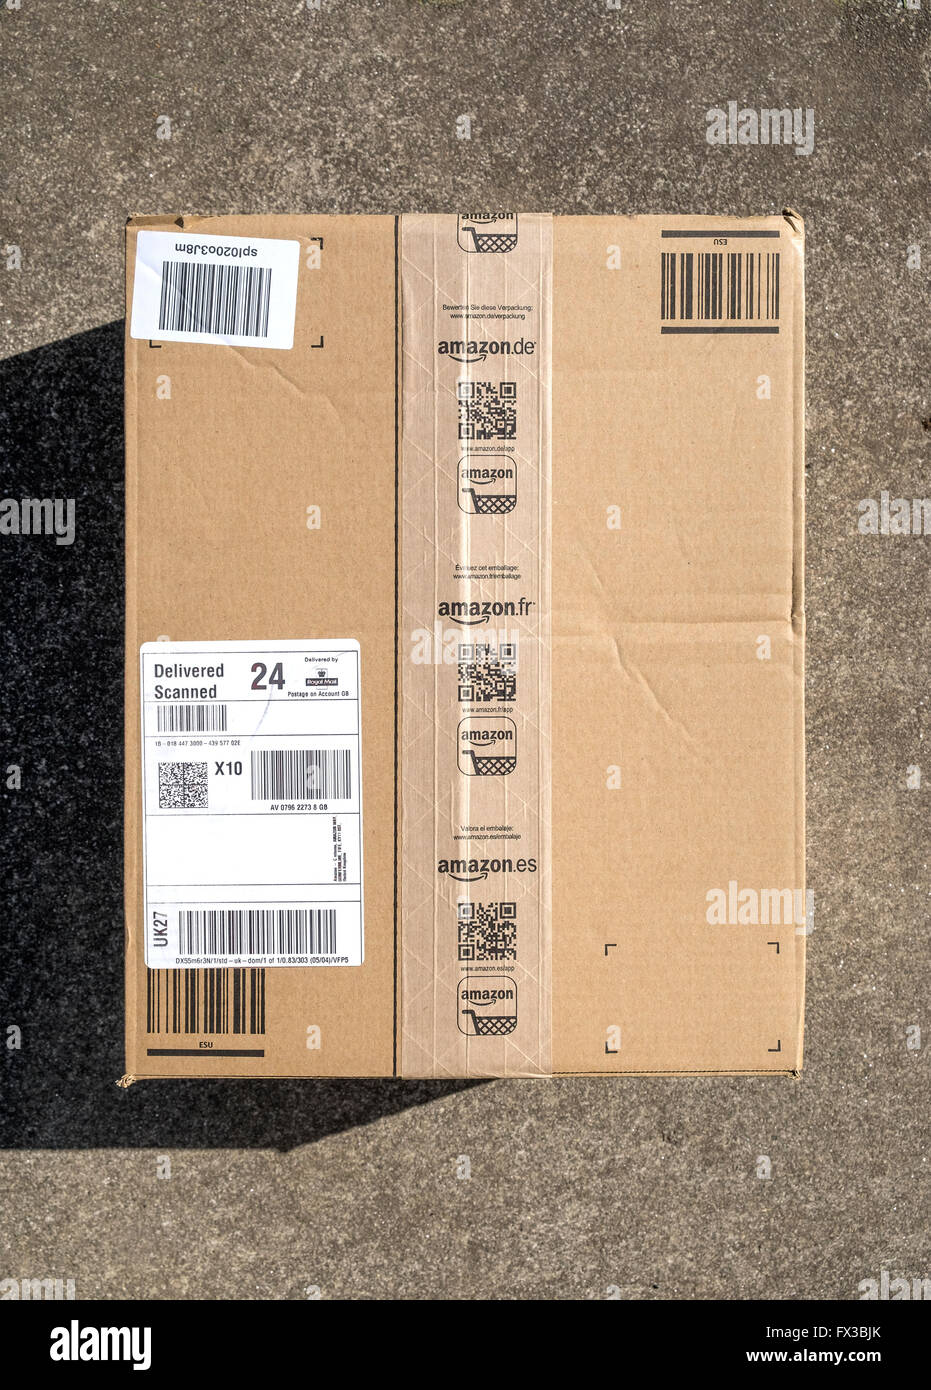 Amazon parcel delivery Stock Photo - Alamy